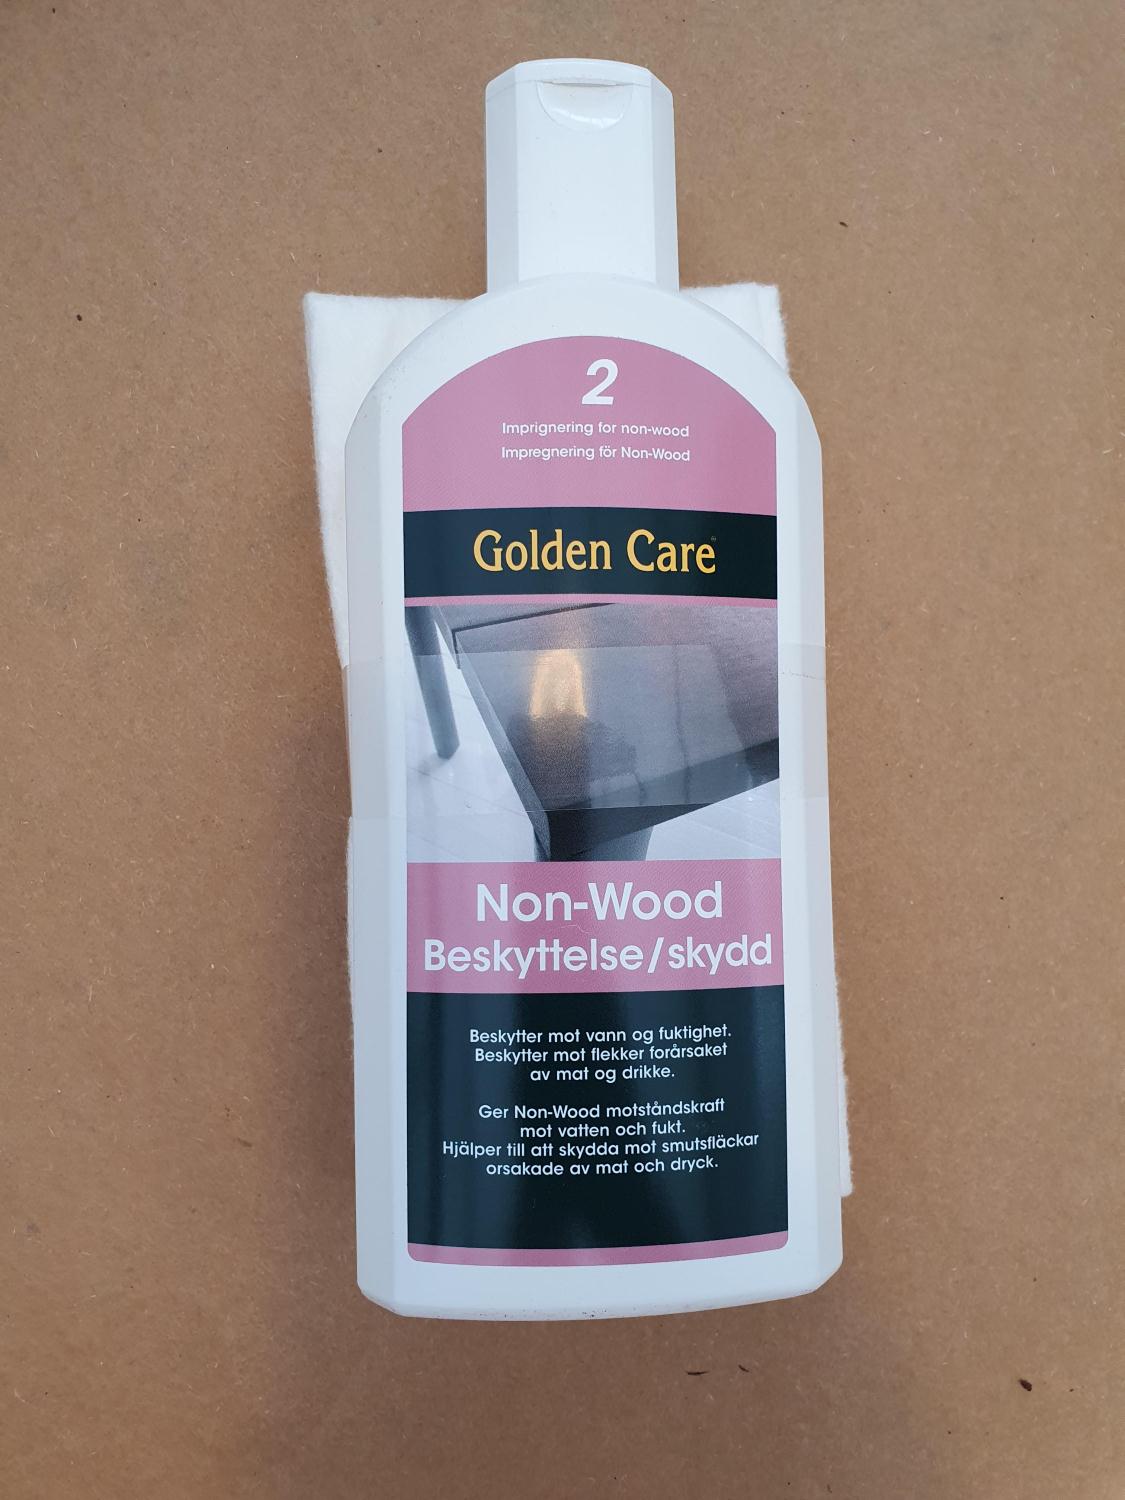 Non-Wood beskytter